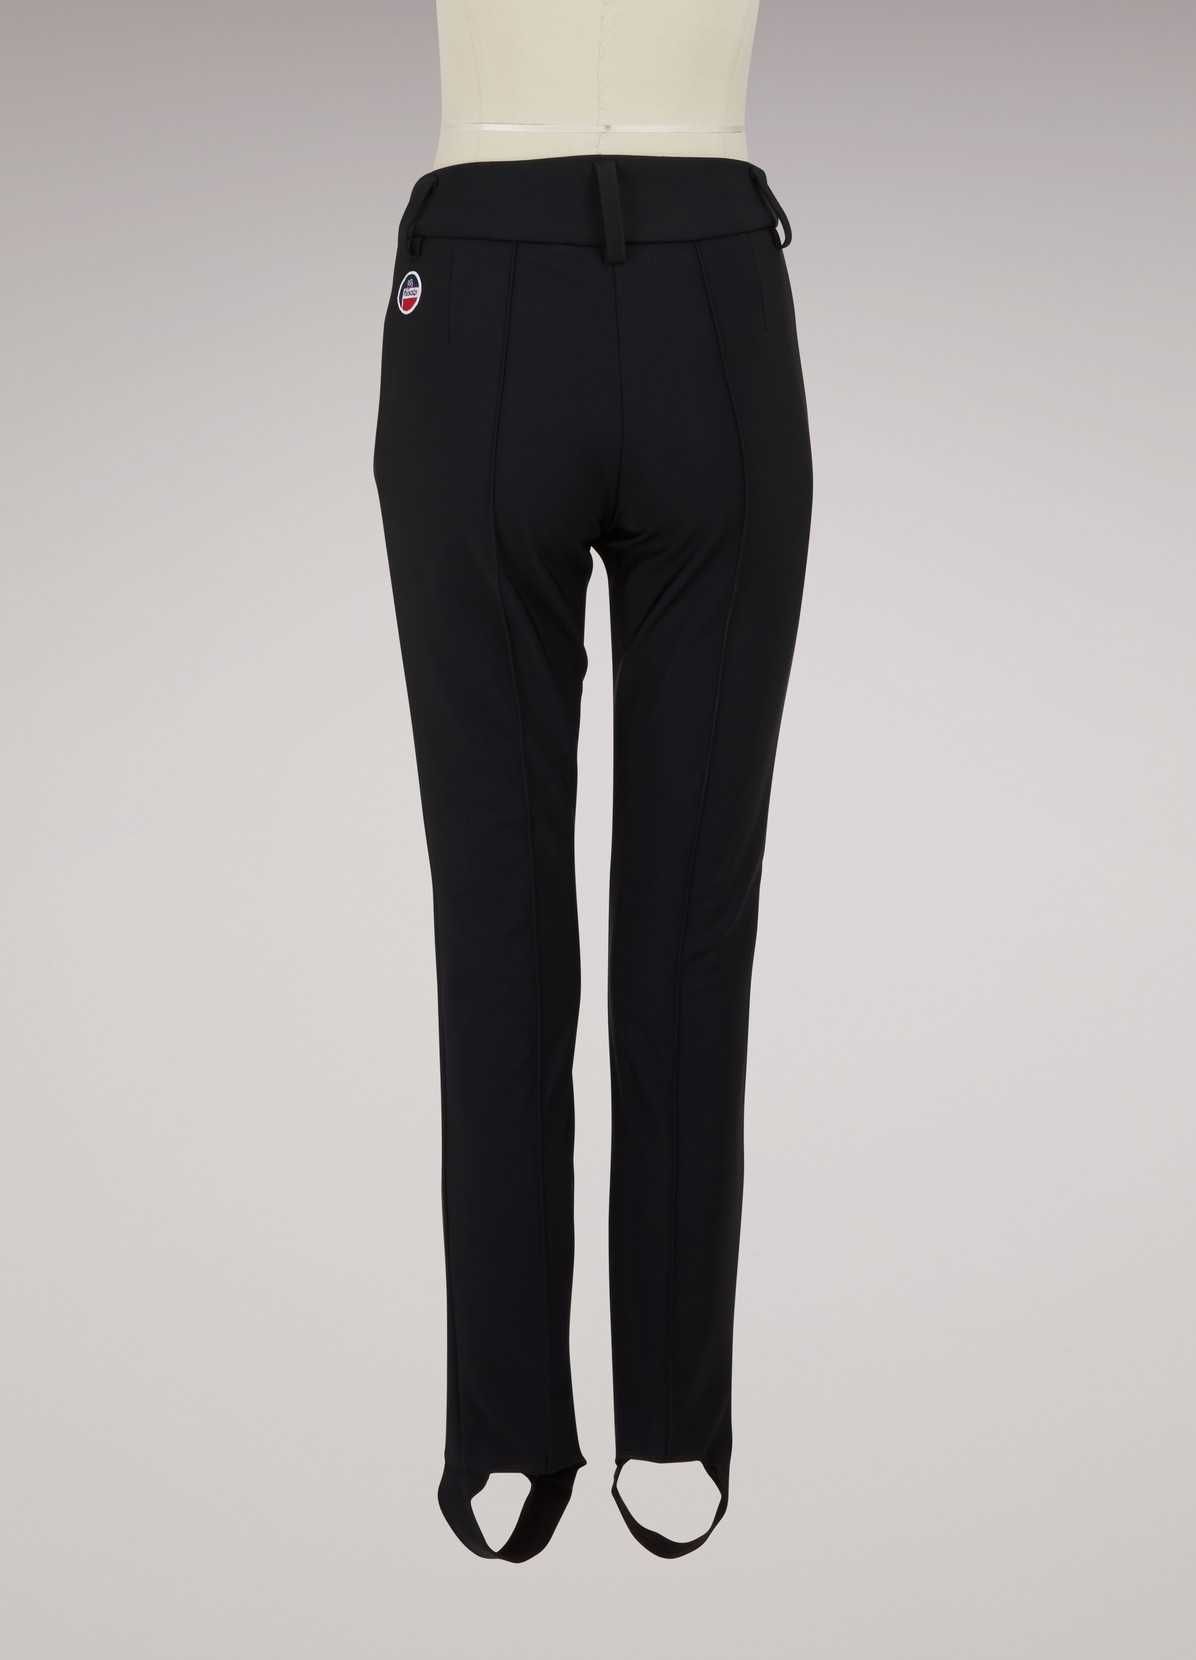 Pantalon de Ski Belalp - Longueur L - Noir